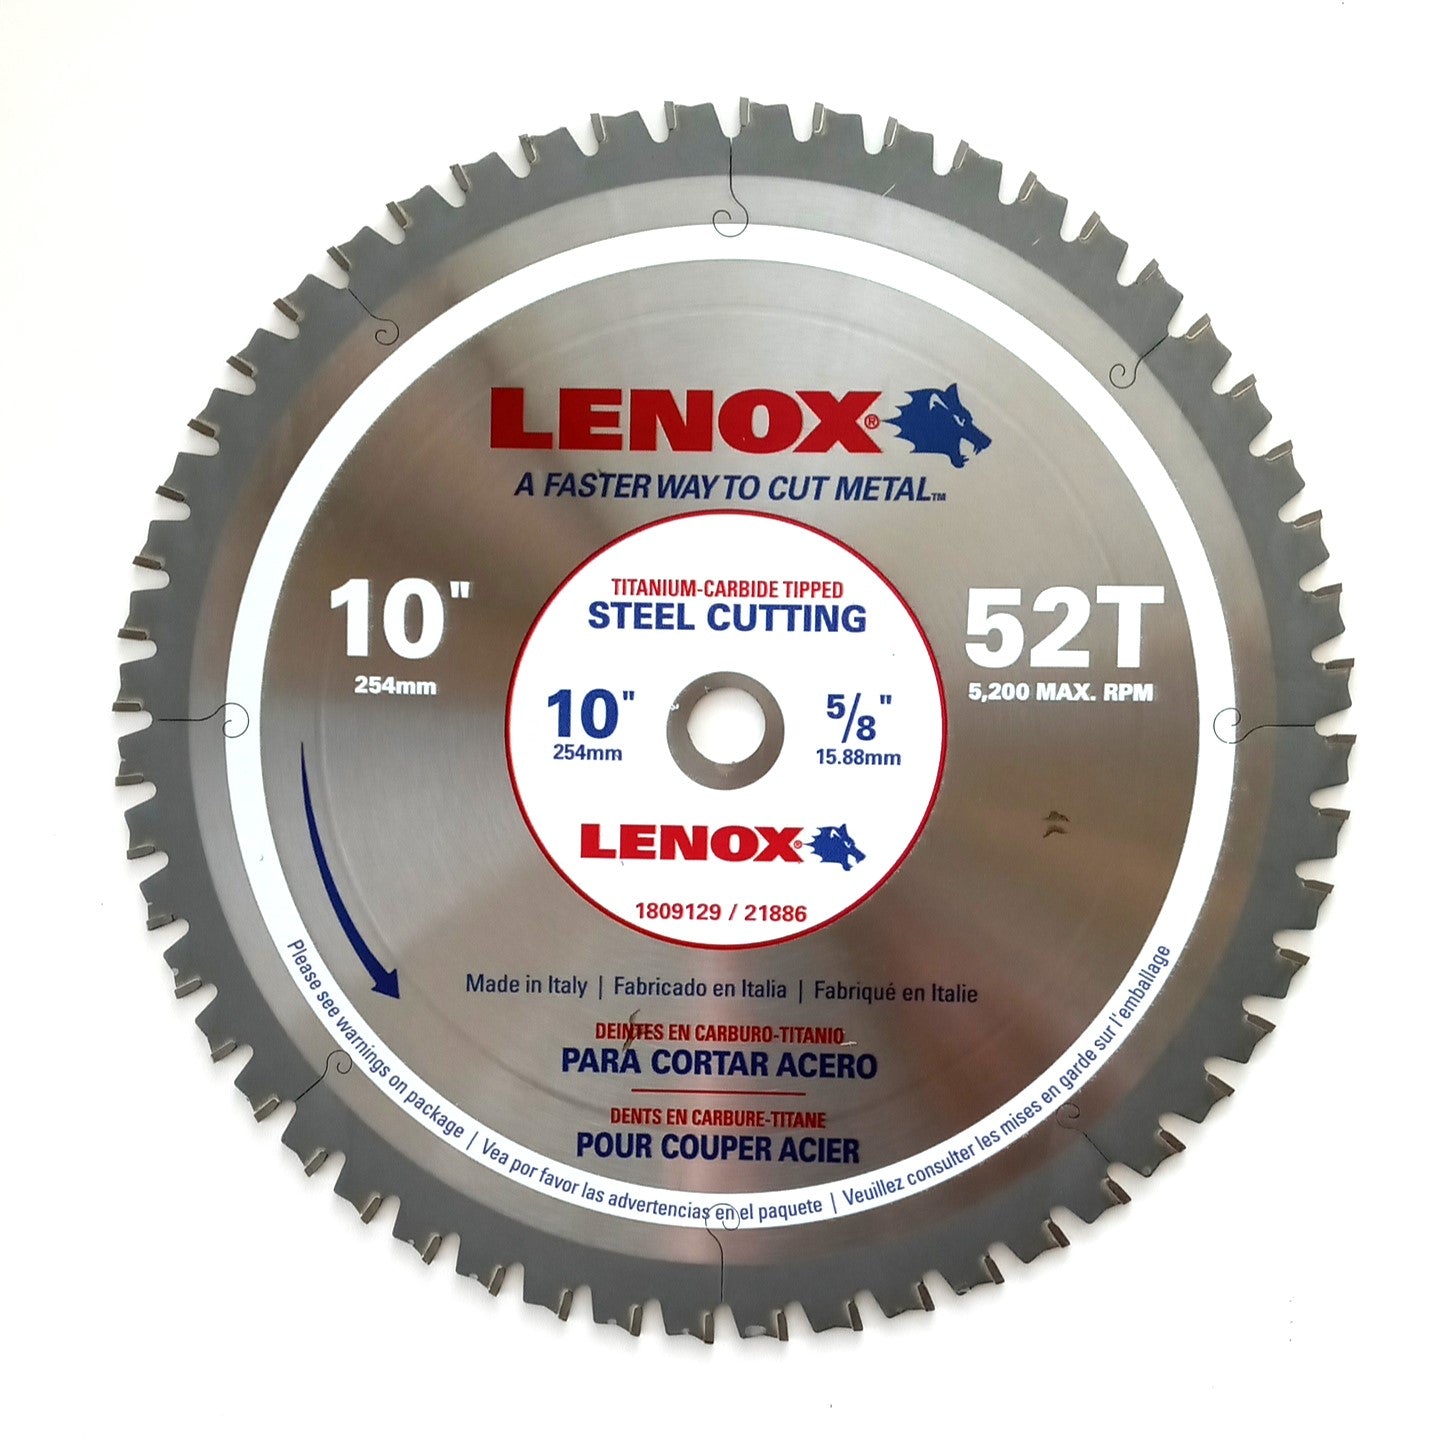 Lenox 21886 10" X 52 Tooth Steel Cutting Saw Blade Italy